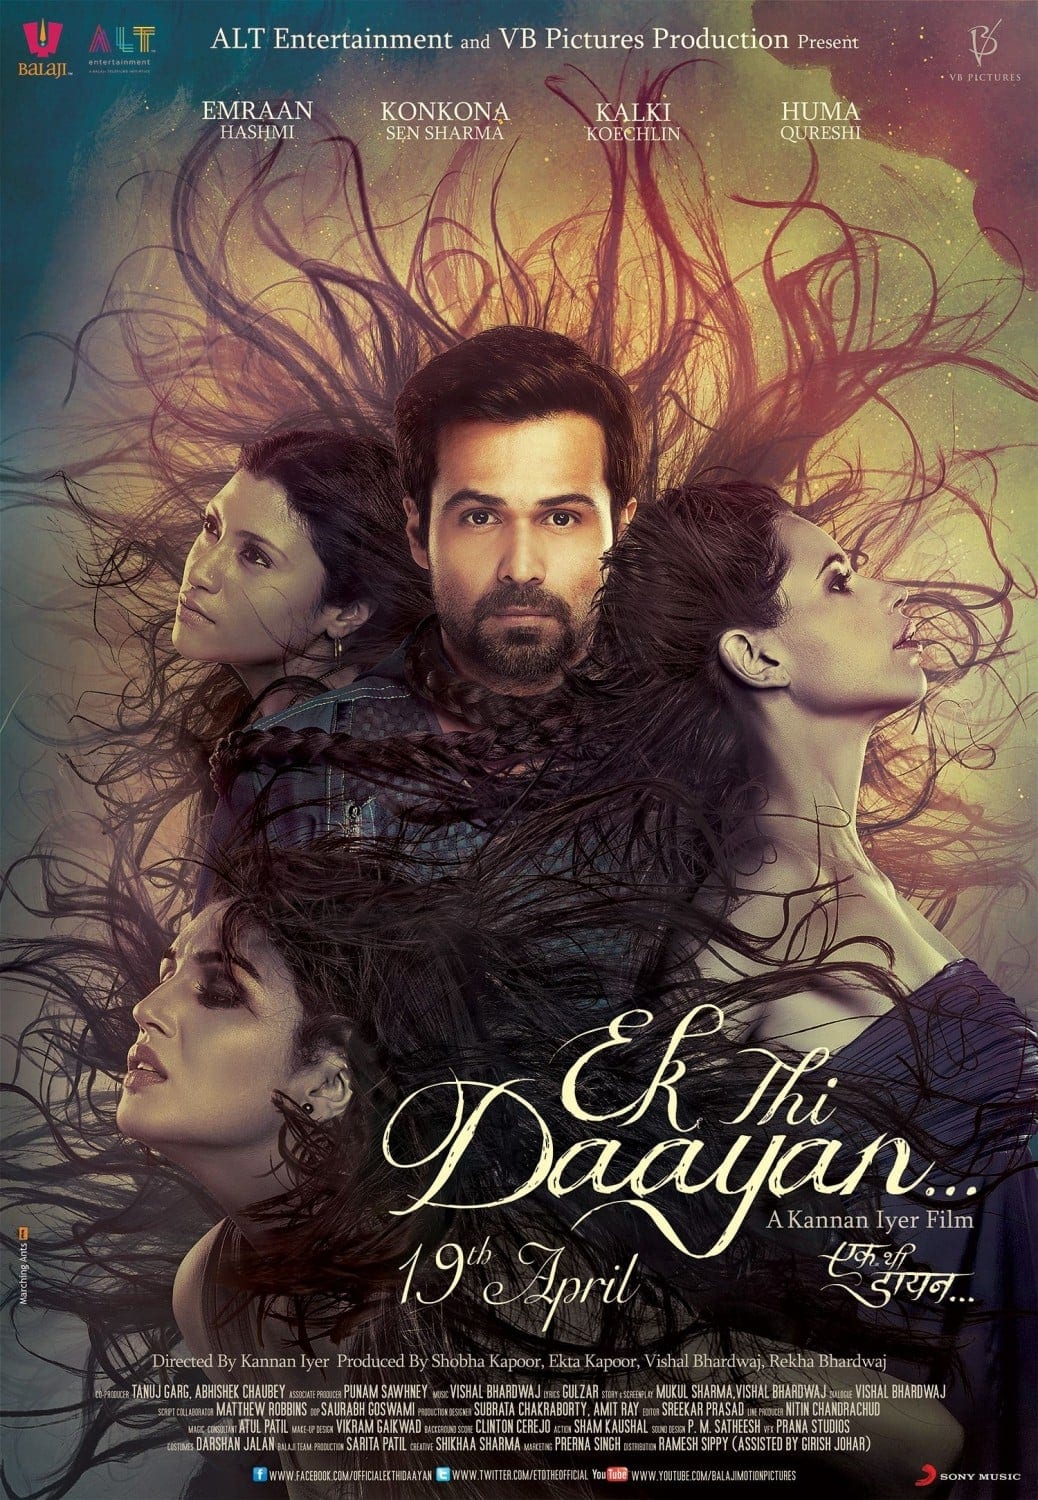 Poster for the movie "Ek Thi Daayan"